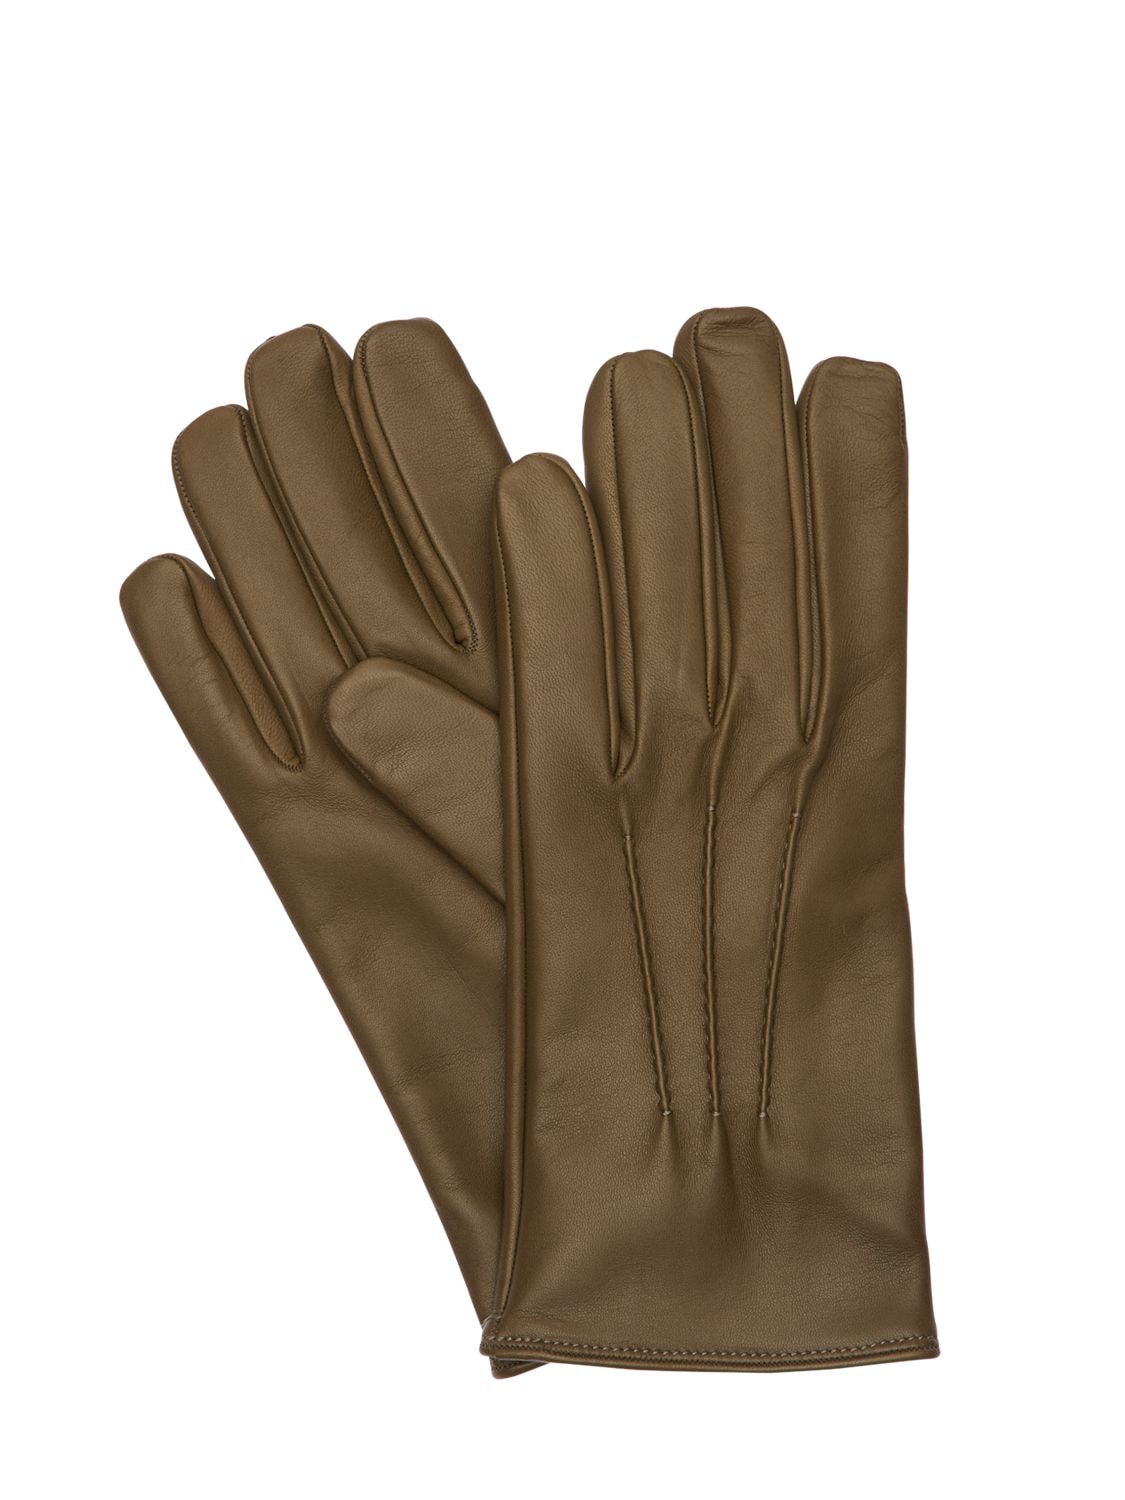 Mario Portolano Leather Gloves In Taupe